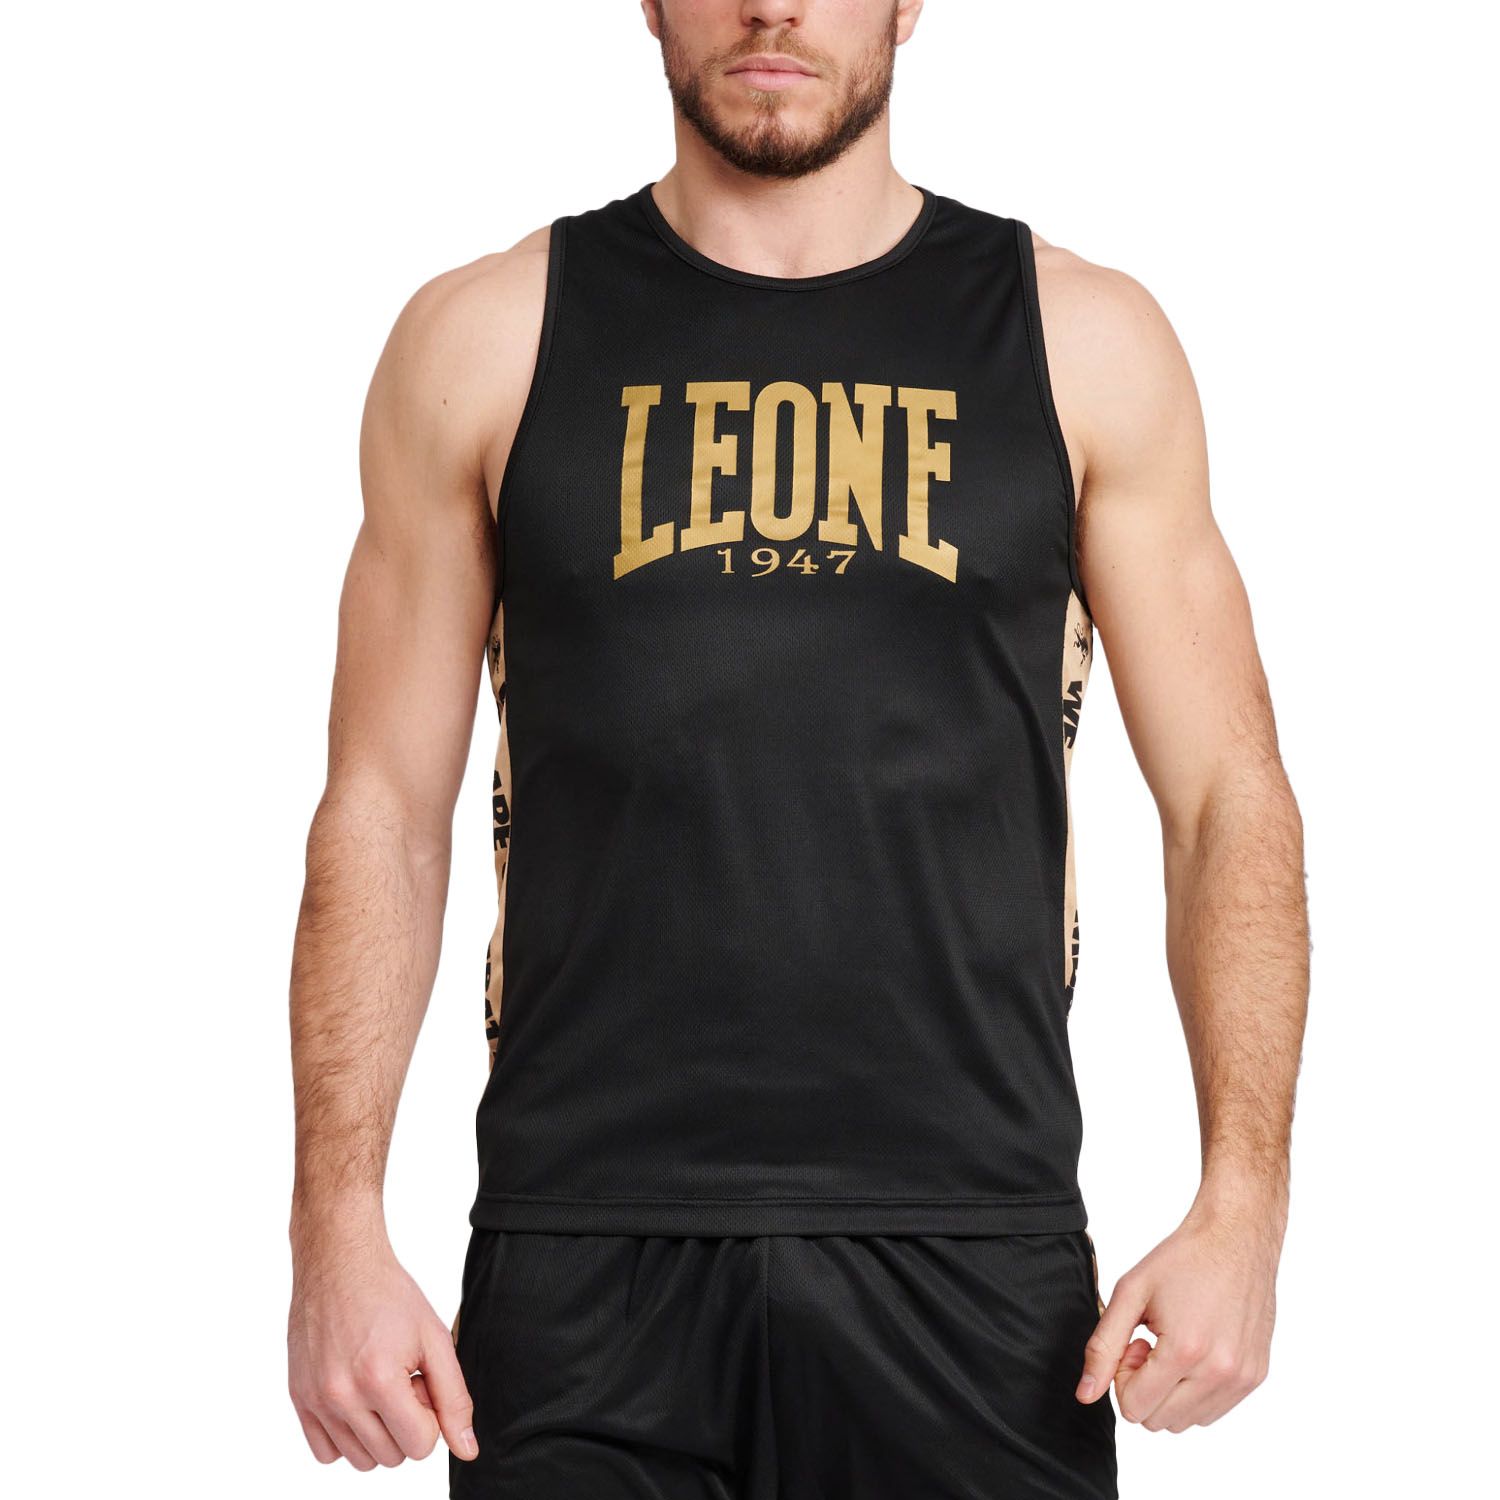 LEONE Fitness T-Shirt, DNA, ABX706, schwarz-gold, M